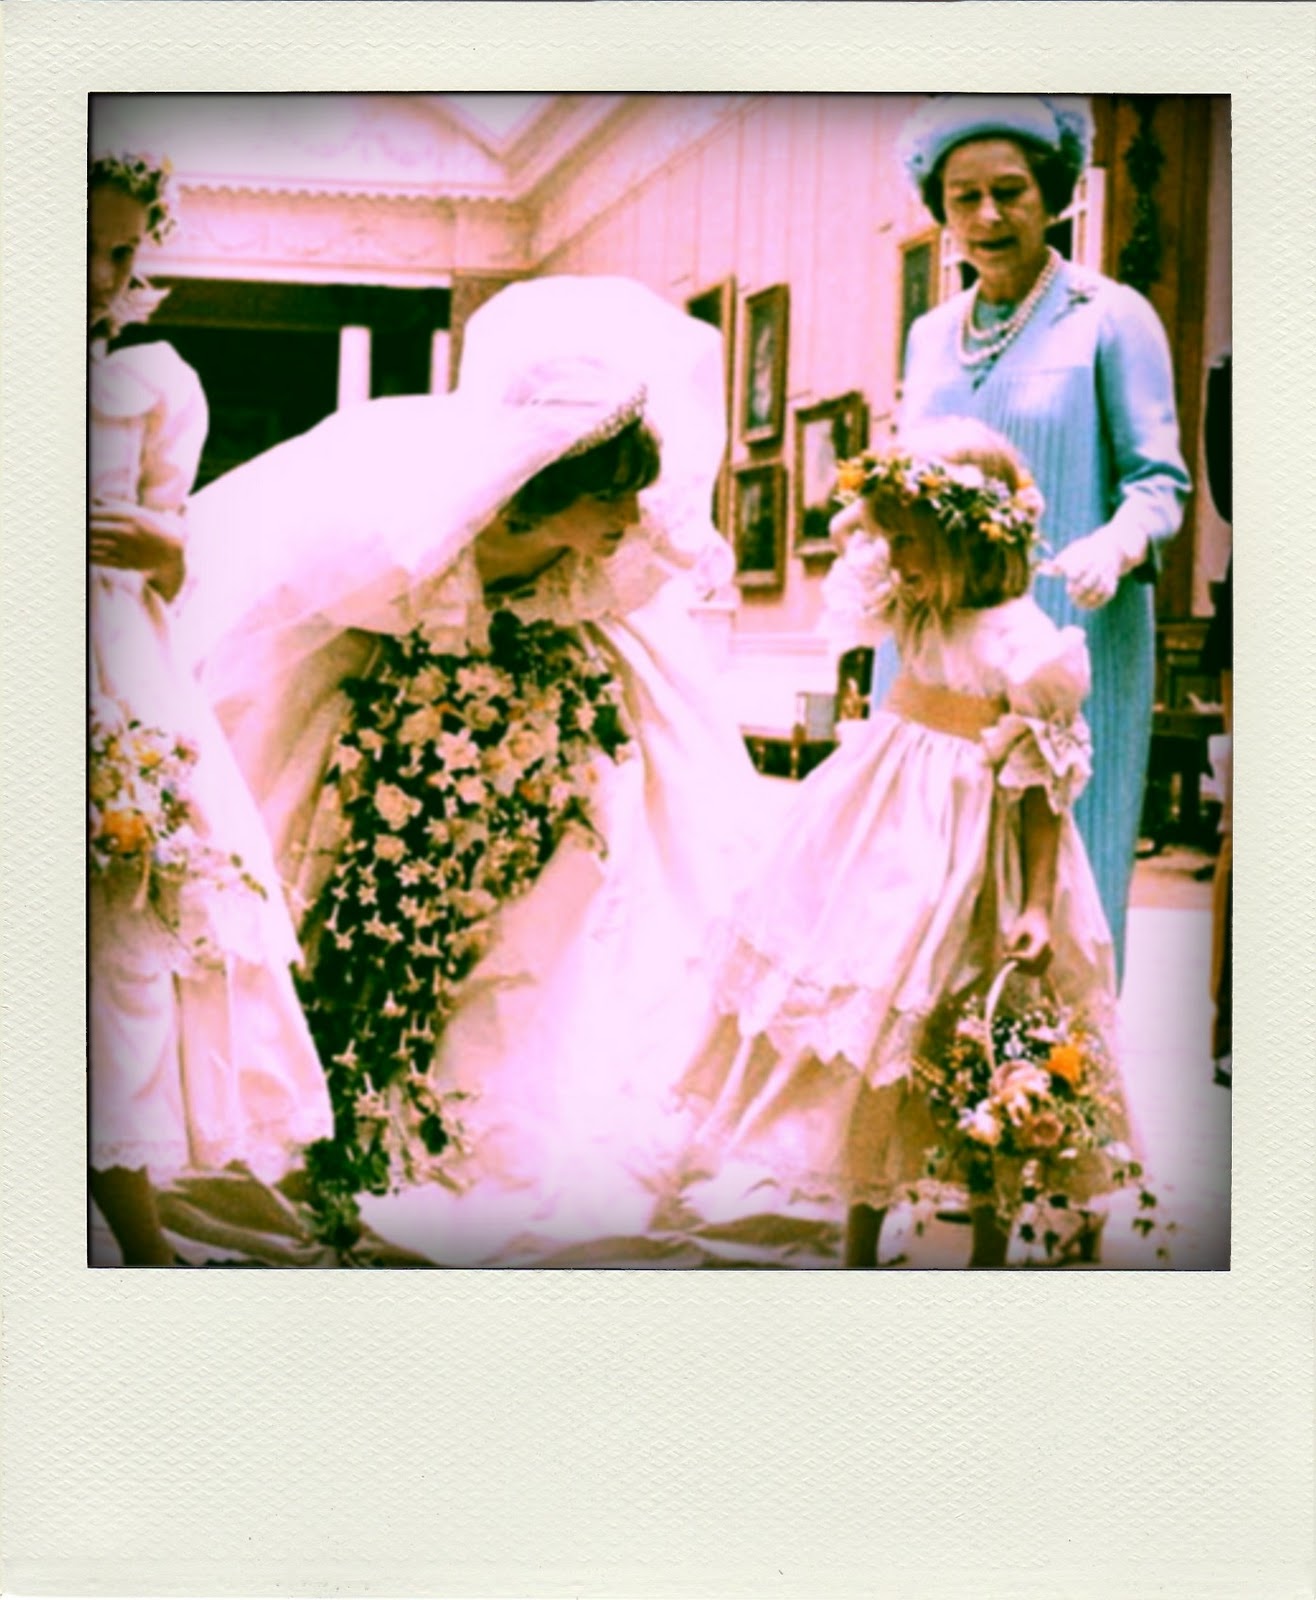 http://1.bp.blogspot.com/-mi4pokWXMLU/TZmeQyUm0CI/AAAAAAAABCE/e6CHlFybmp8/s1600/a+royal+wedding+to+remember+princess+diana+pola.jpg